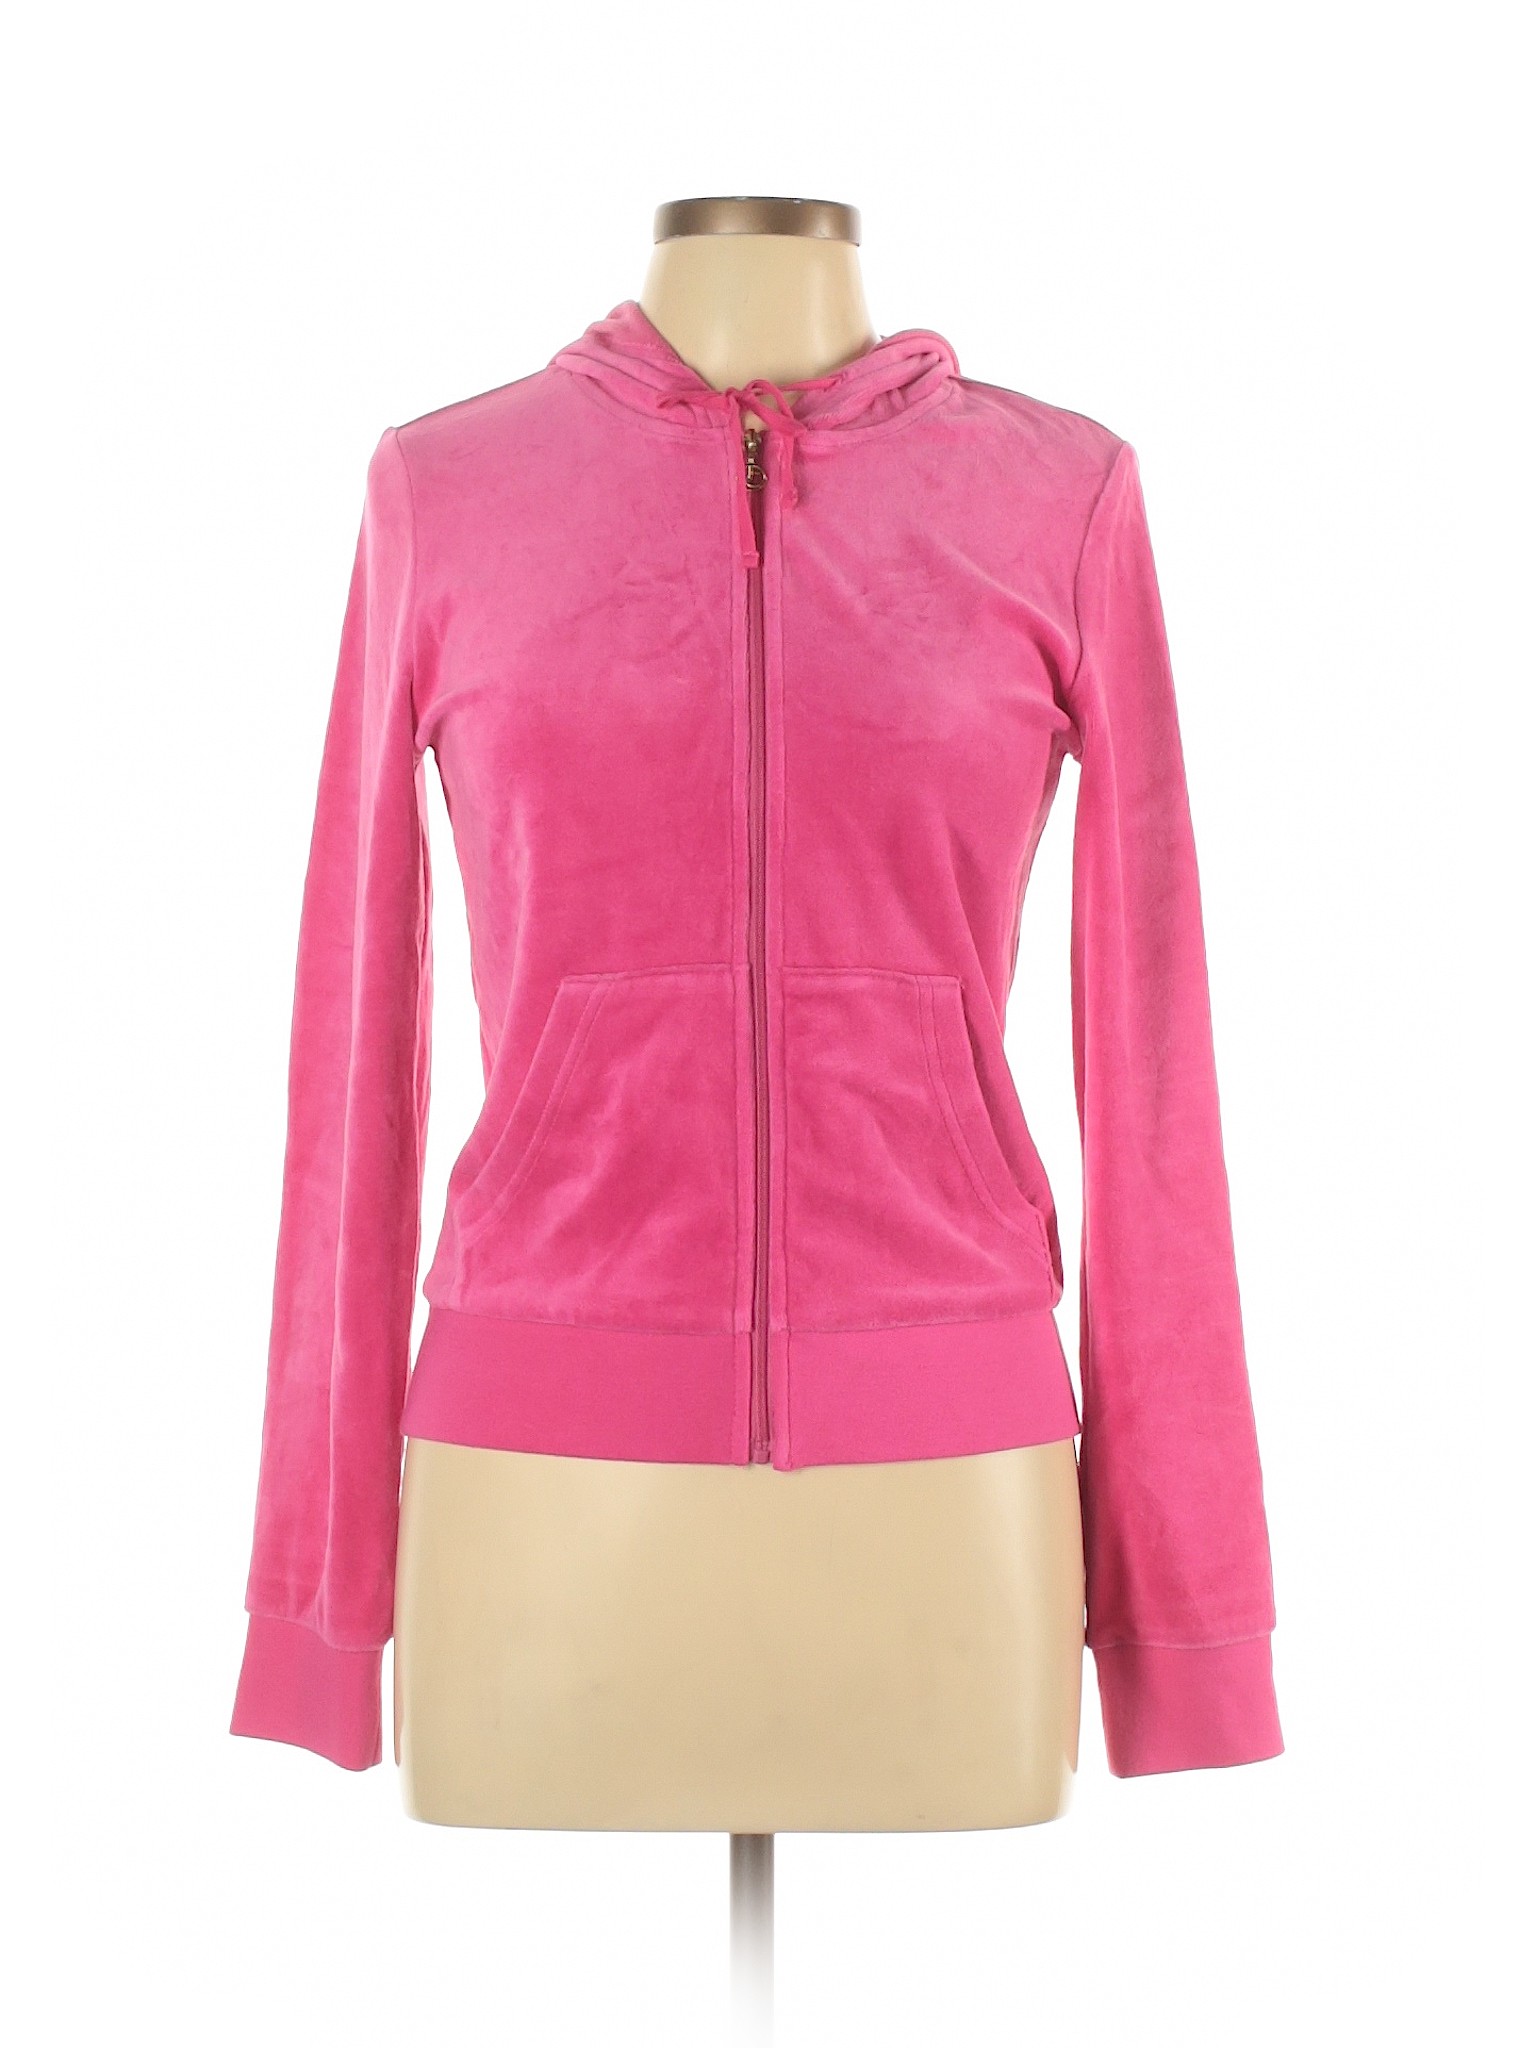 Juicy Couture Solid Pink Zip Up Hoodie Size M - 80% off | thredUP